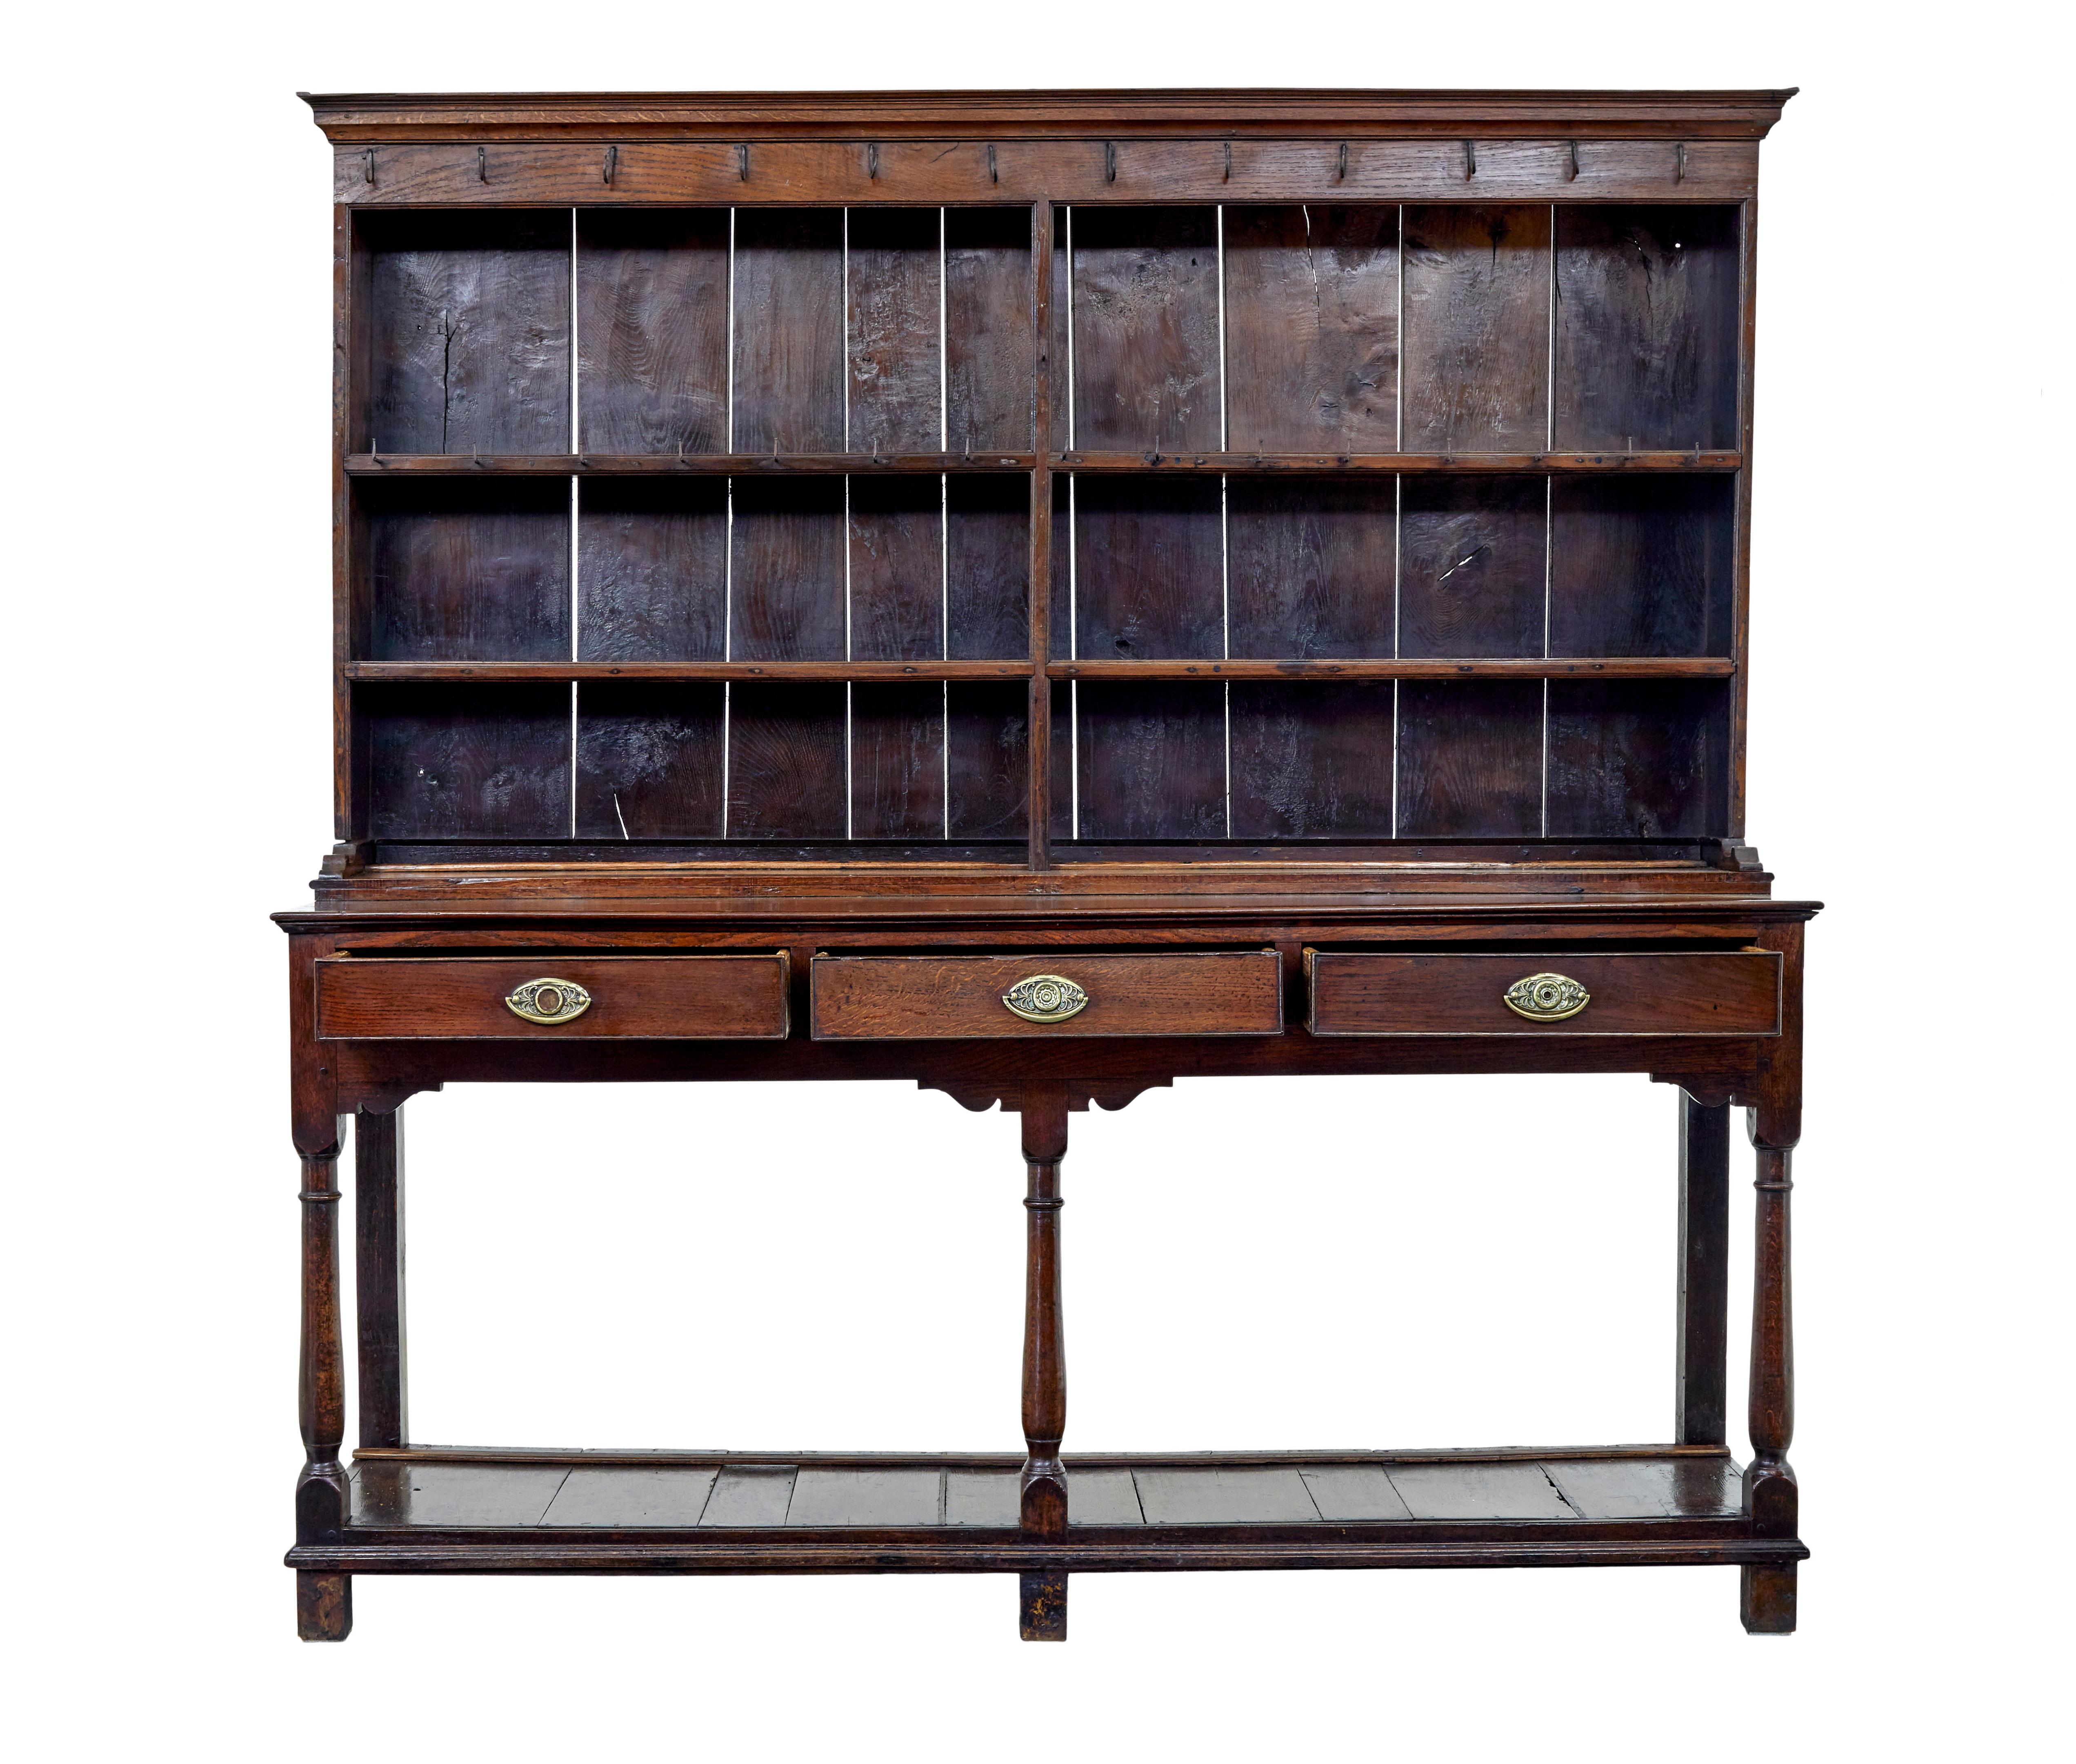 Georgian Early 19th century Welsh oak dresser and rack For Sale